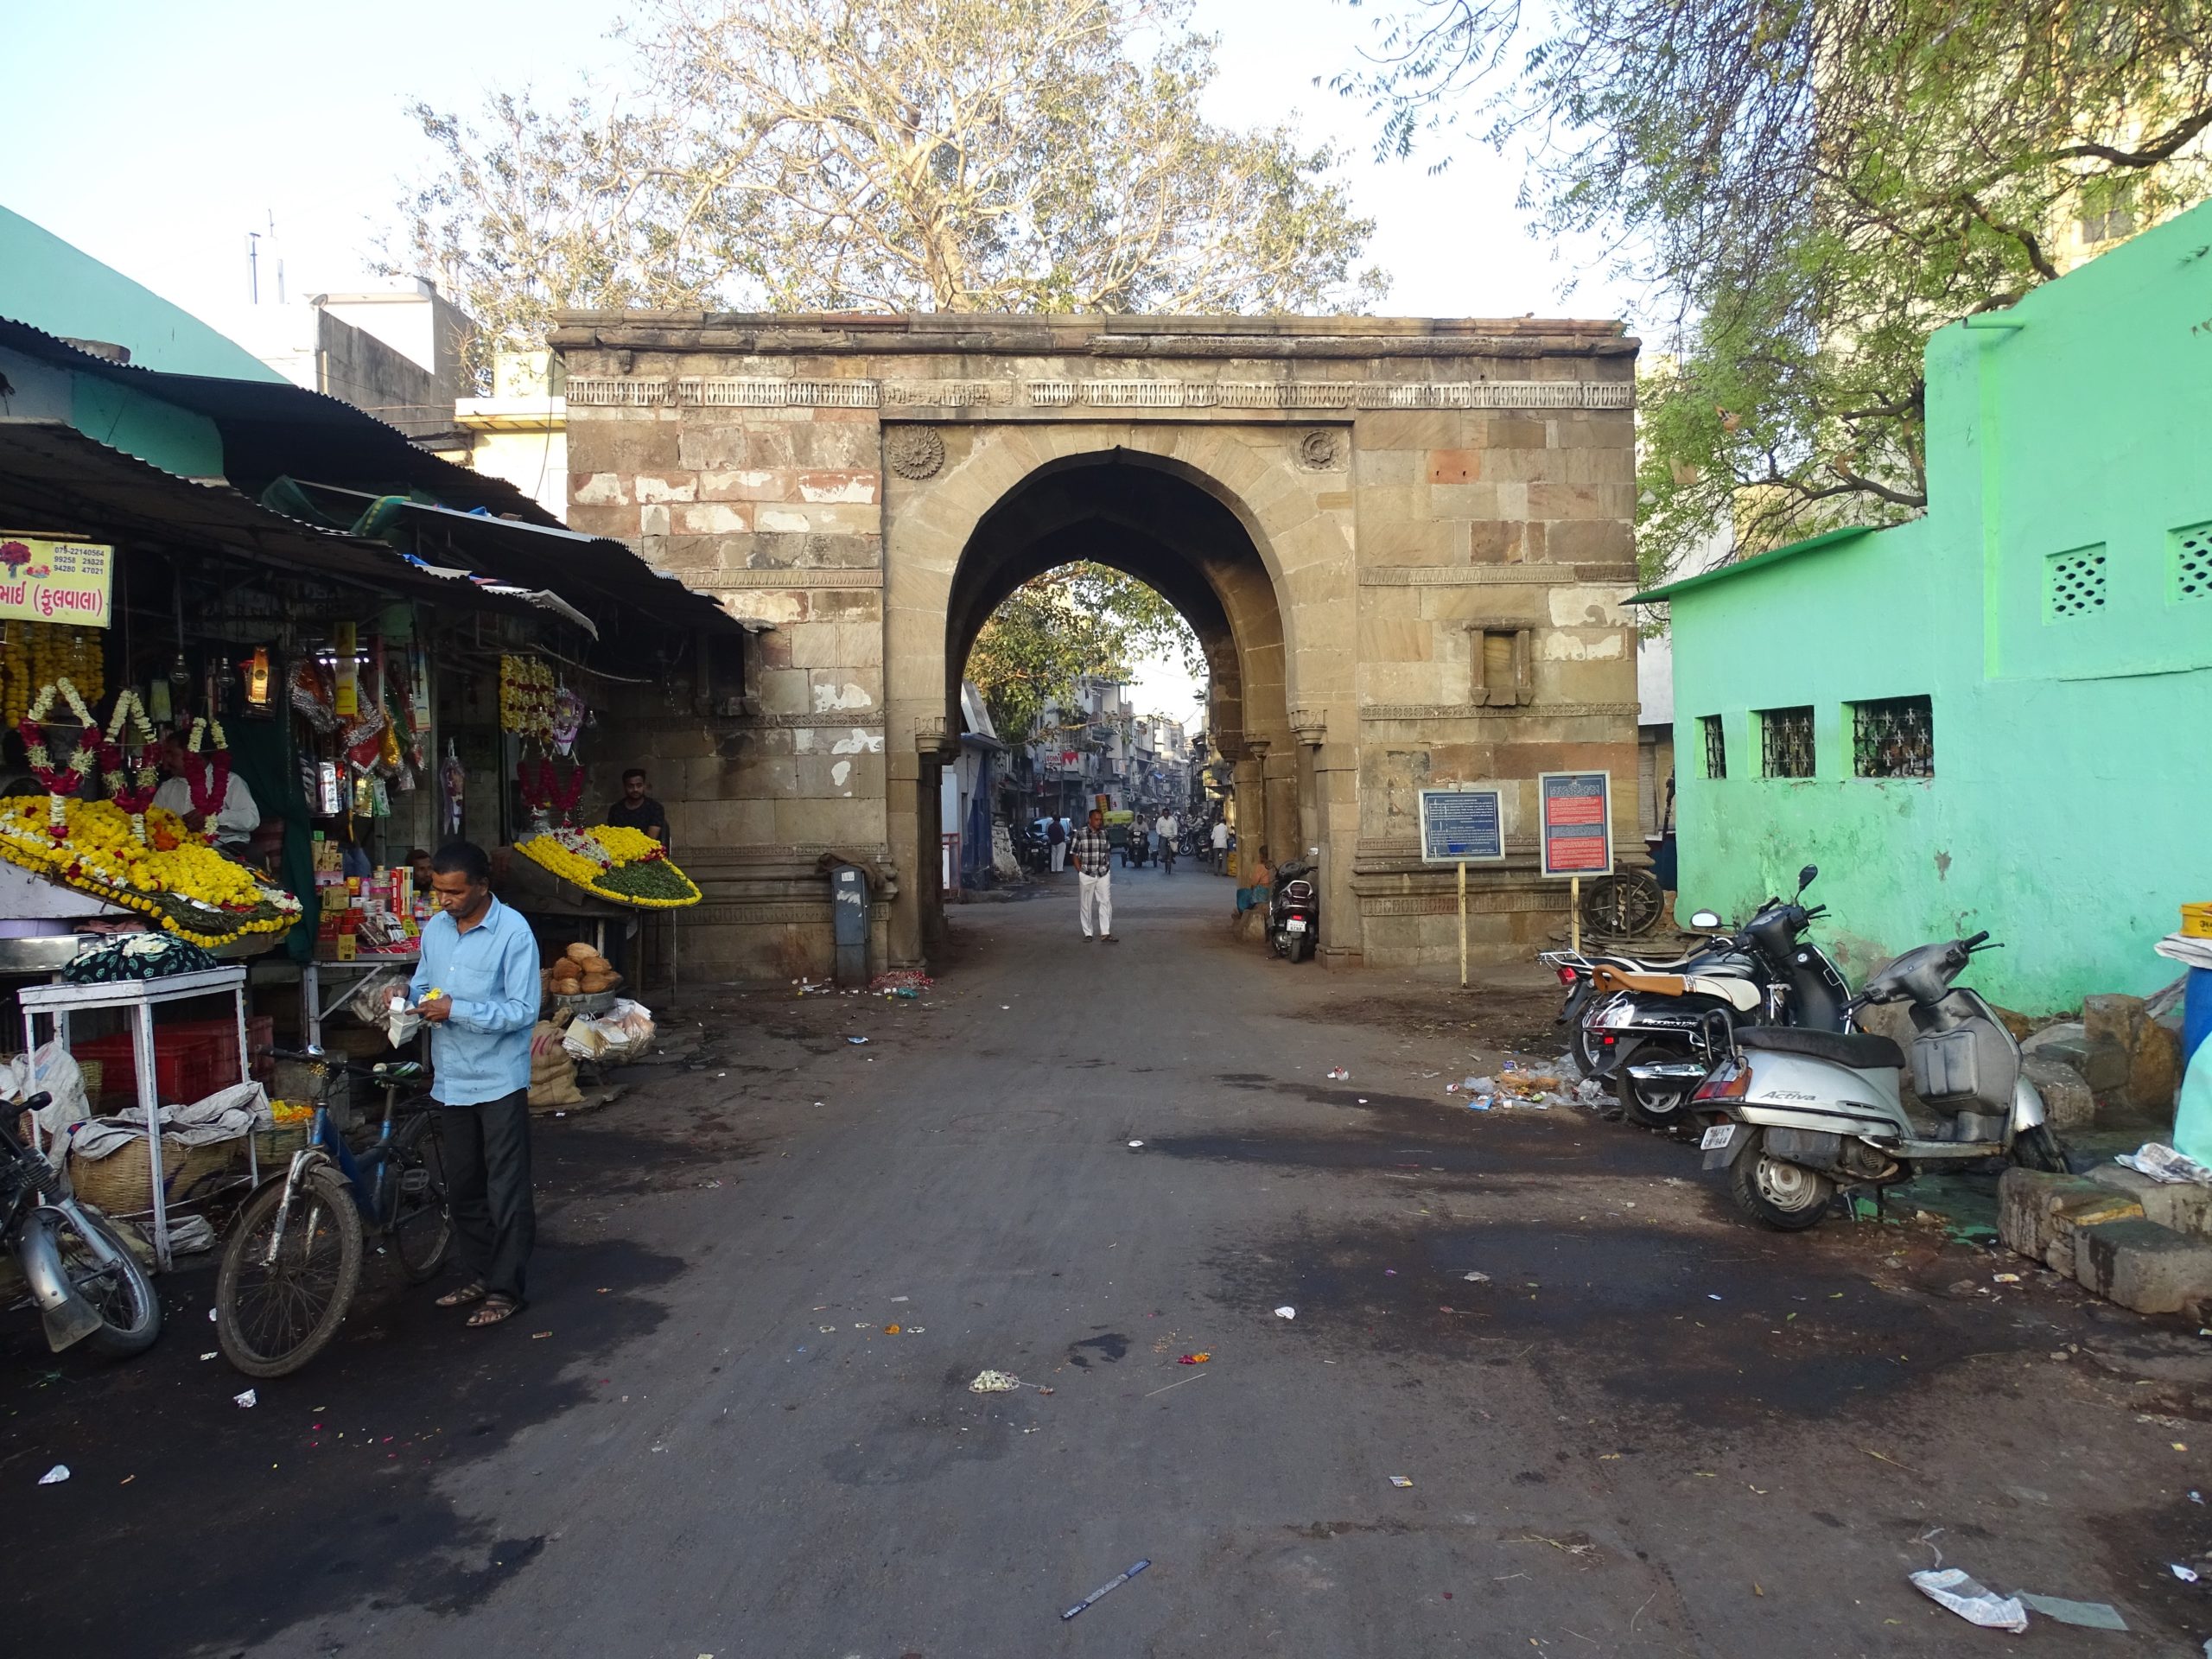 Sarangpur Gate – Built by Sultan Mahmud Begada